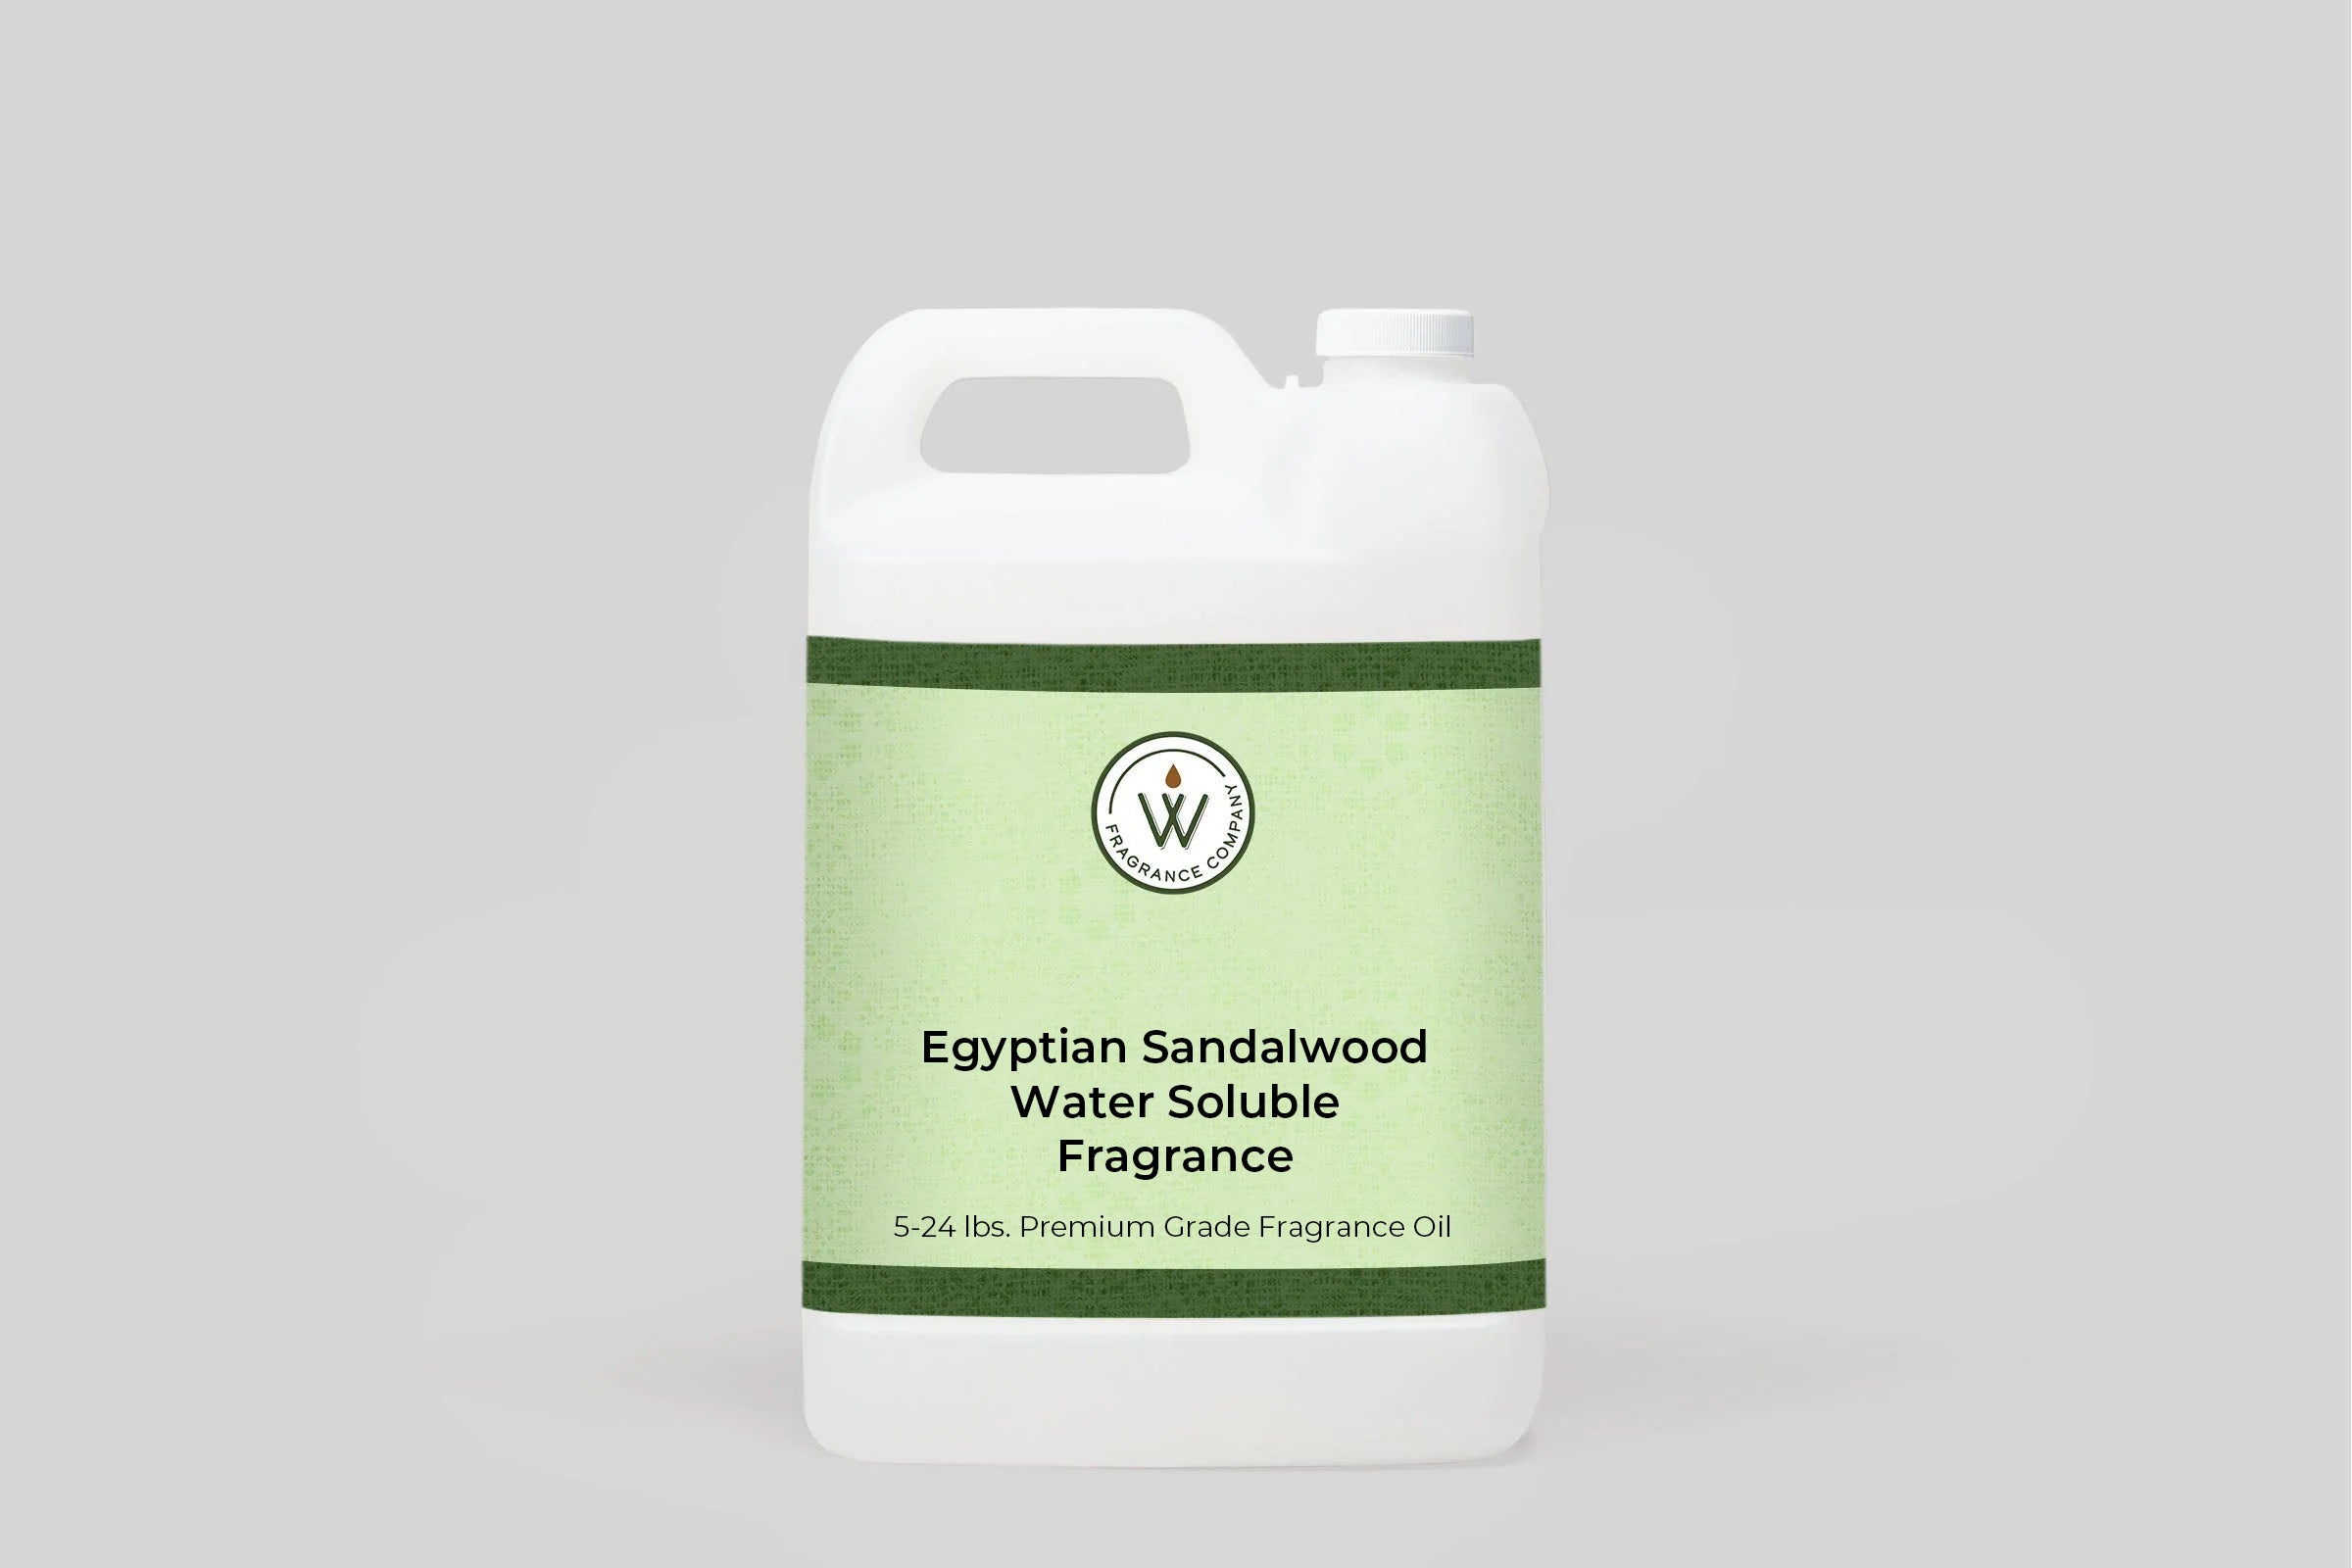 Egyptian Sandalwood Water Soluble Fragrance